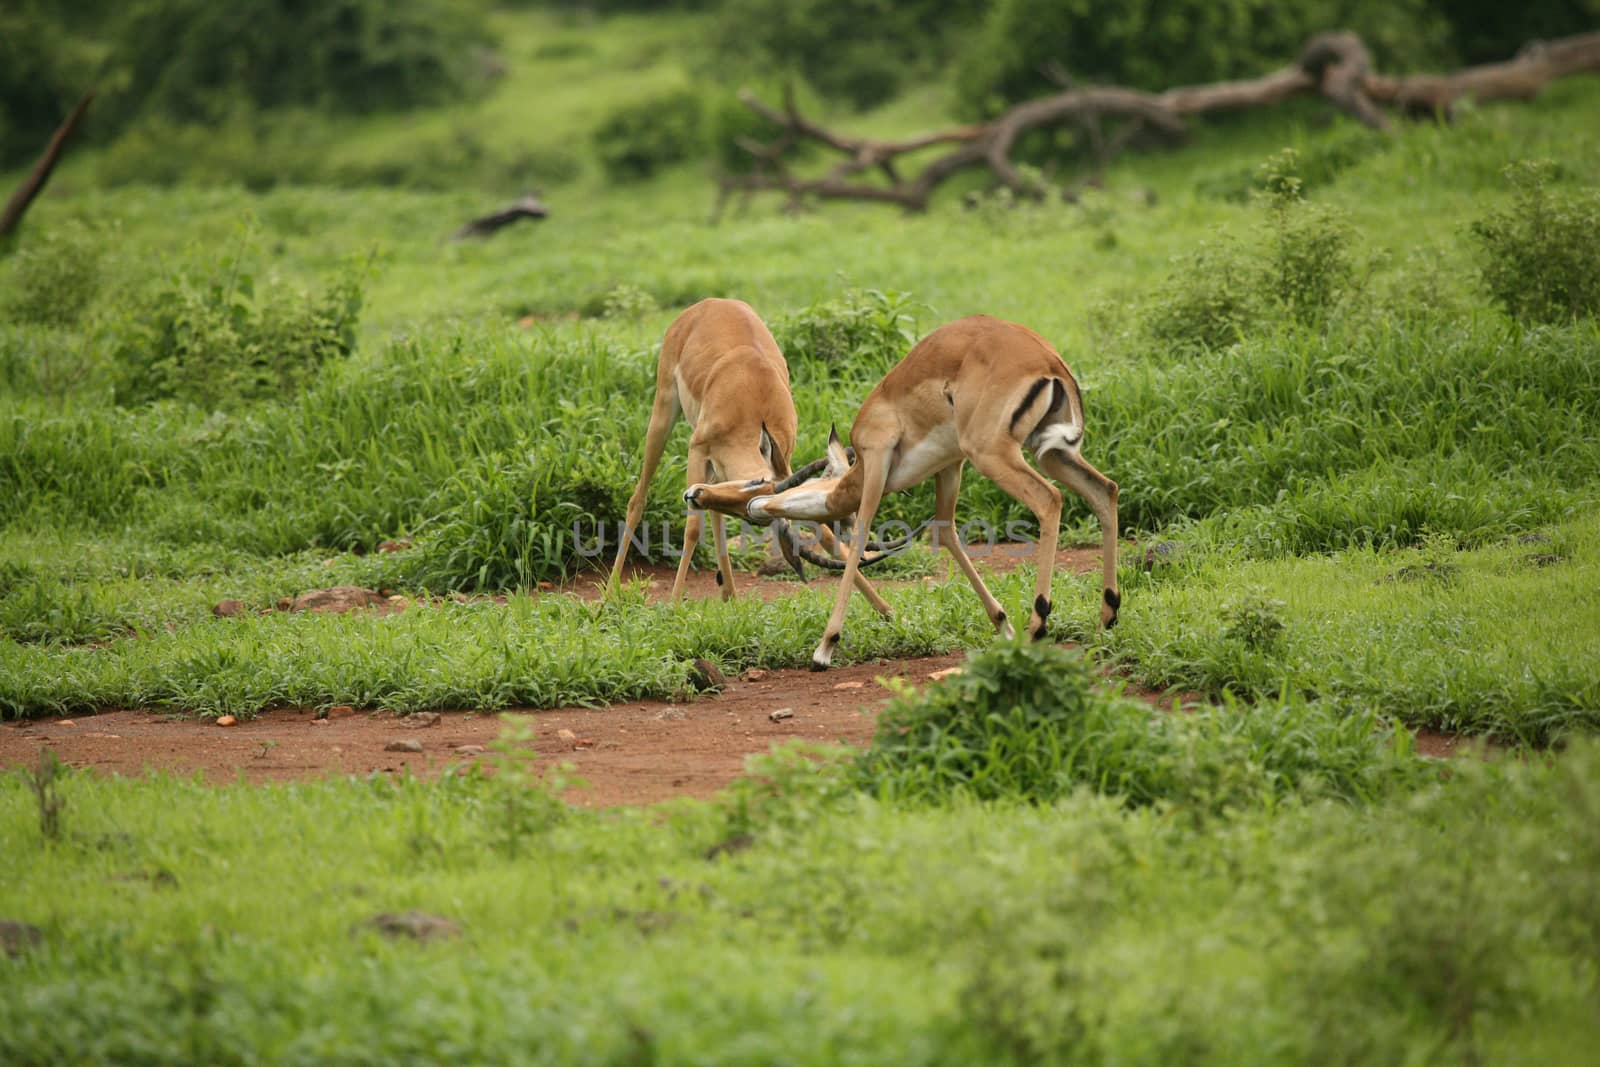 Wild Antelope mammal in African Botswana savannah